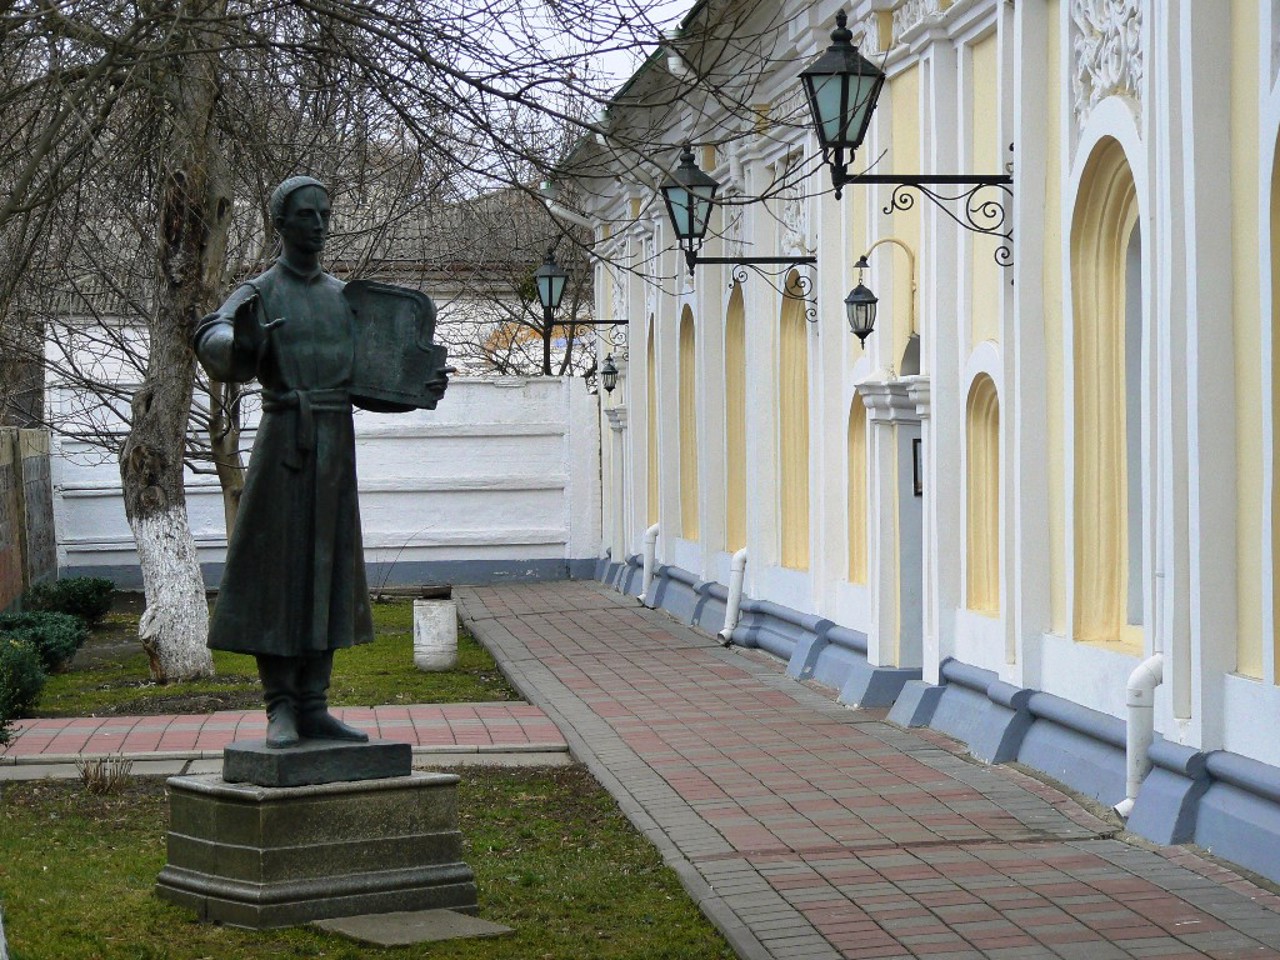 Skovoroda Museum (Collegium), Pereyaslav